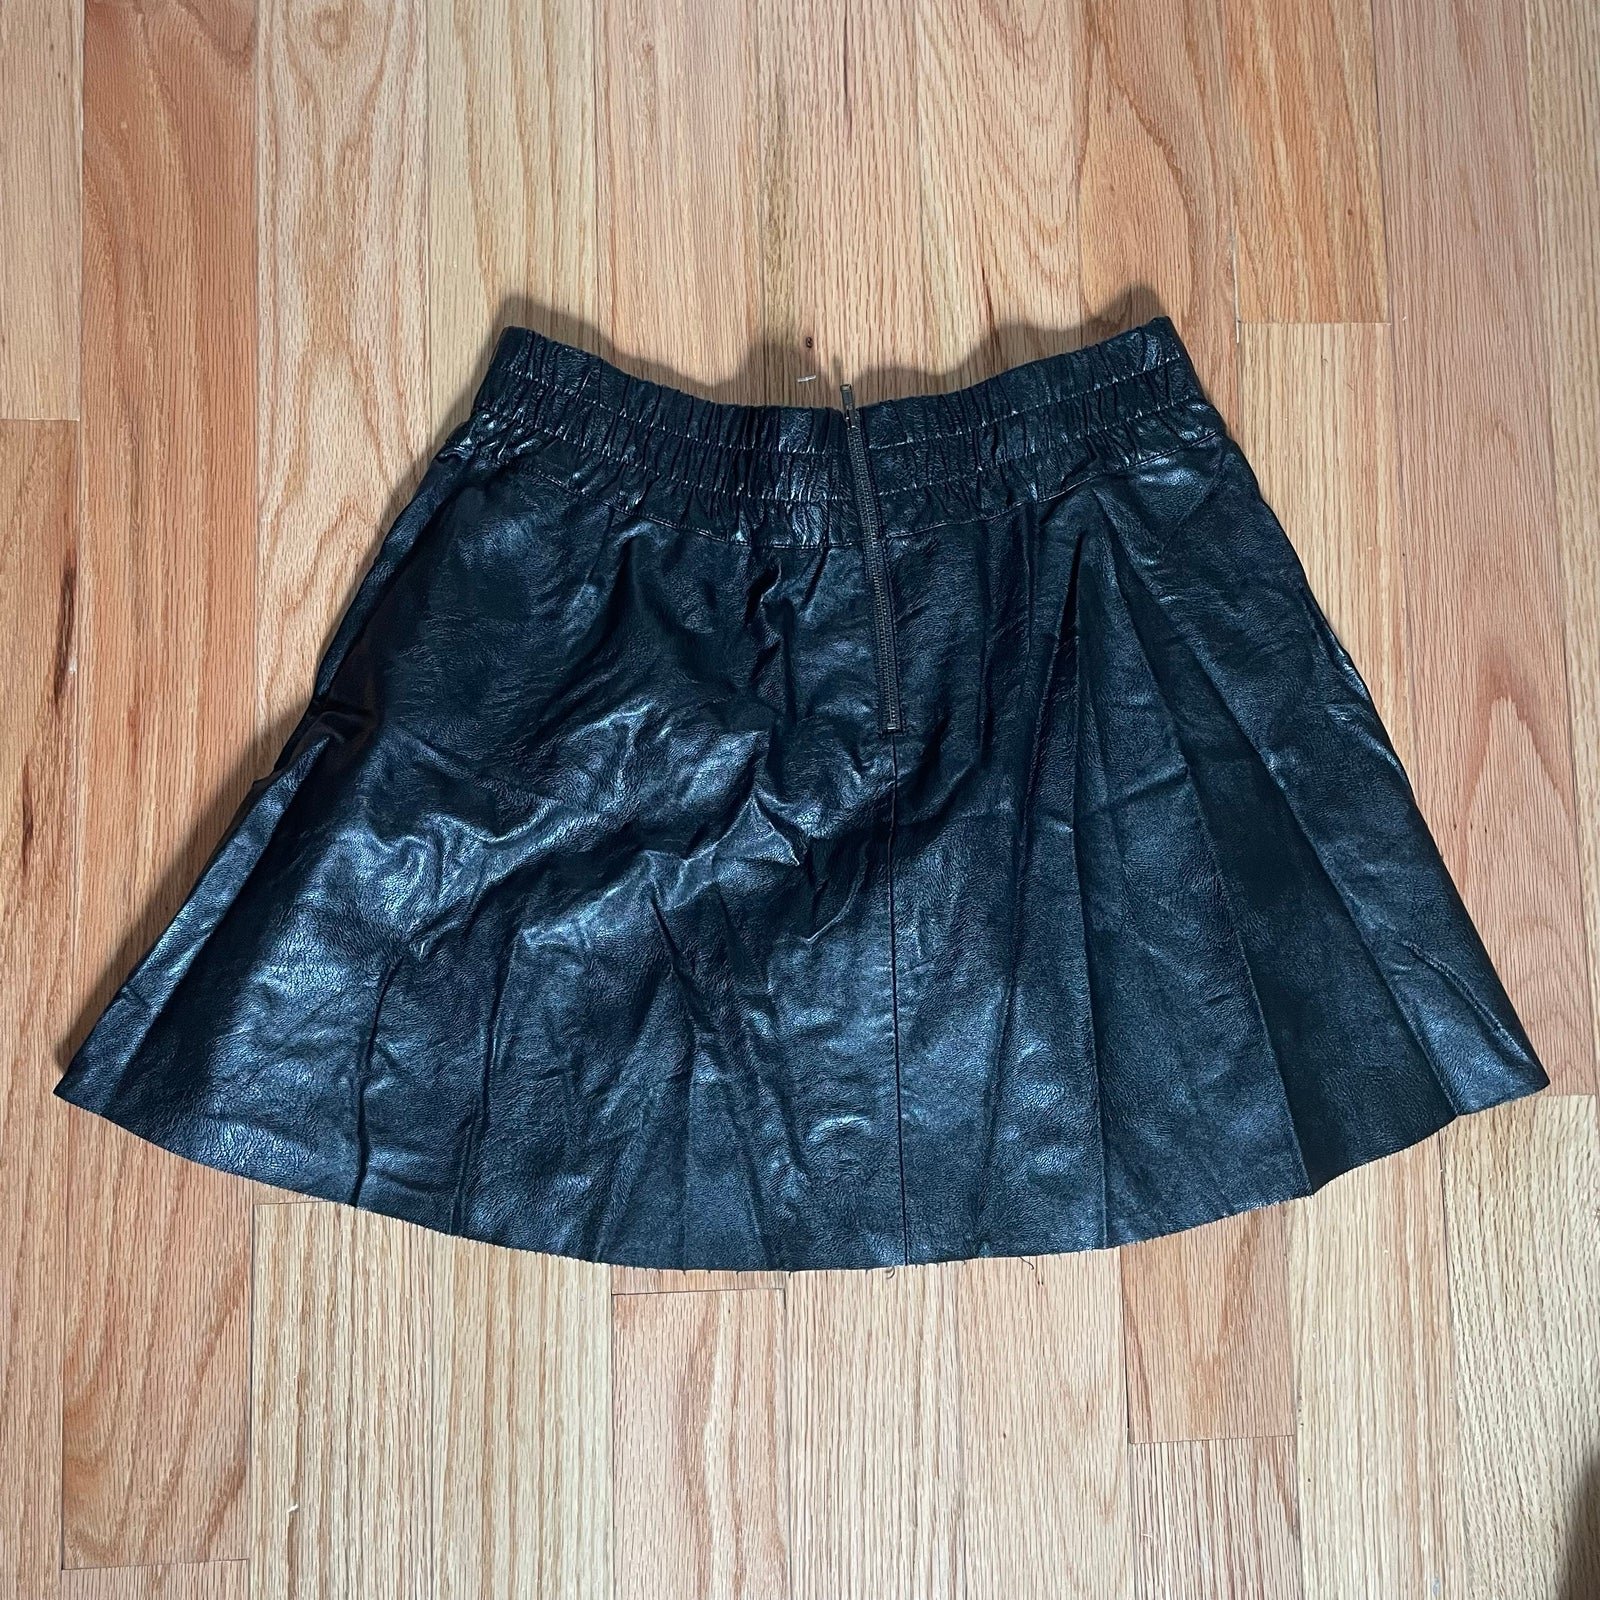 Buy Pam & Gela Black Faux Leather Two Pocket Elastic Waist Mini Skirt EUC Size M pBKsaXBWs just buy it